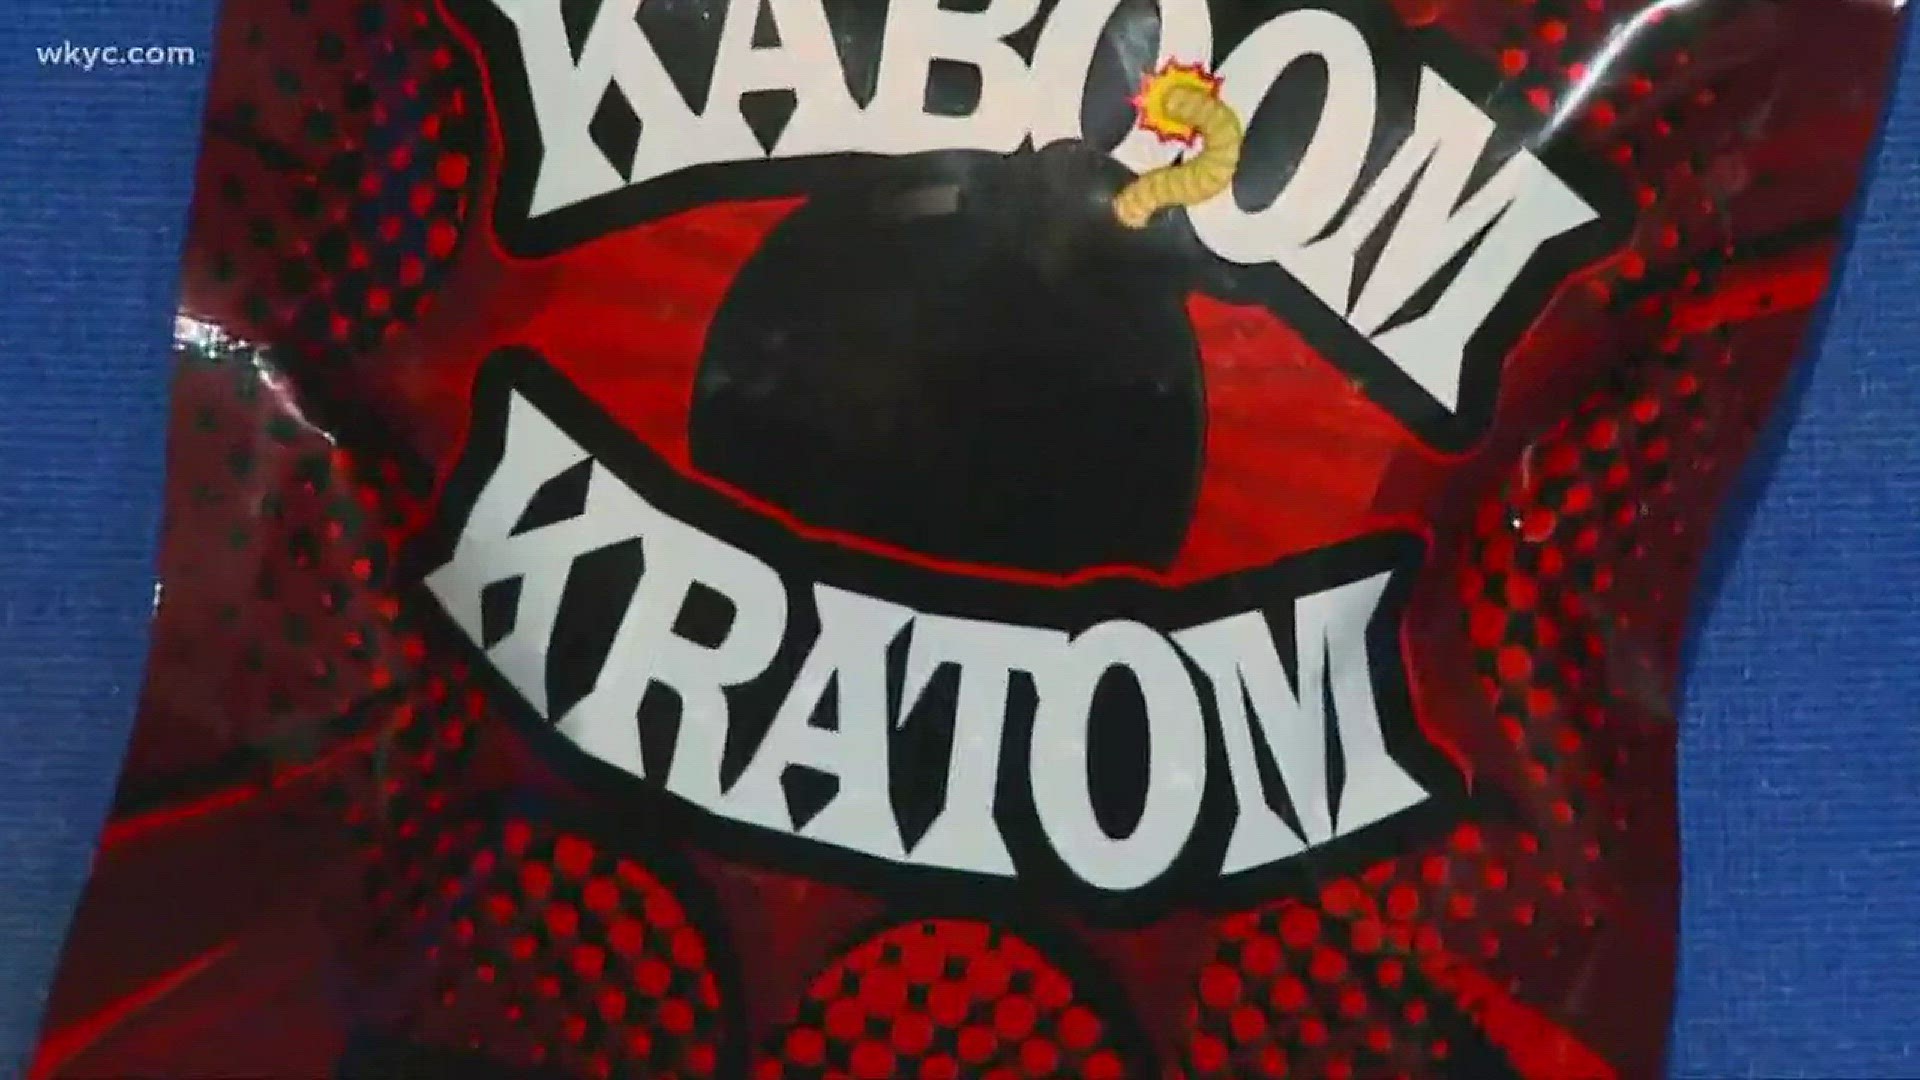 FDA adds Kratom as an opioid